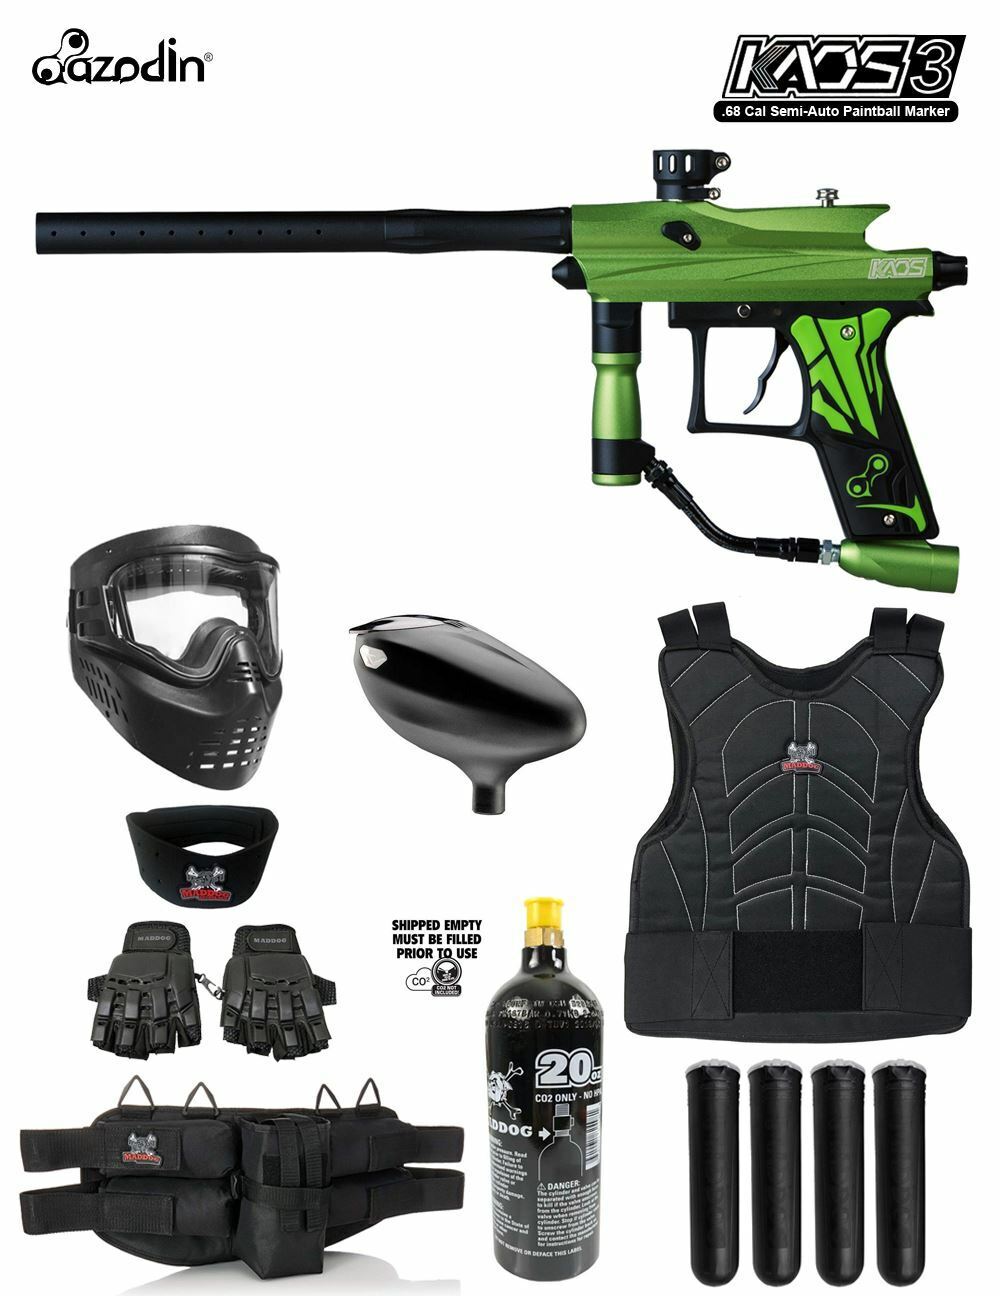 Maddog Azodin Kaos 3 Protective Co2 Paintball Gun Marker Starter Package Green